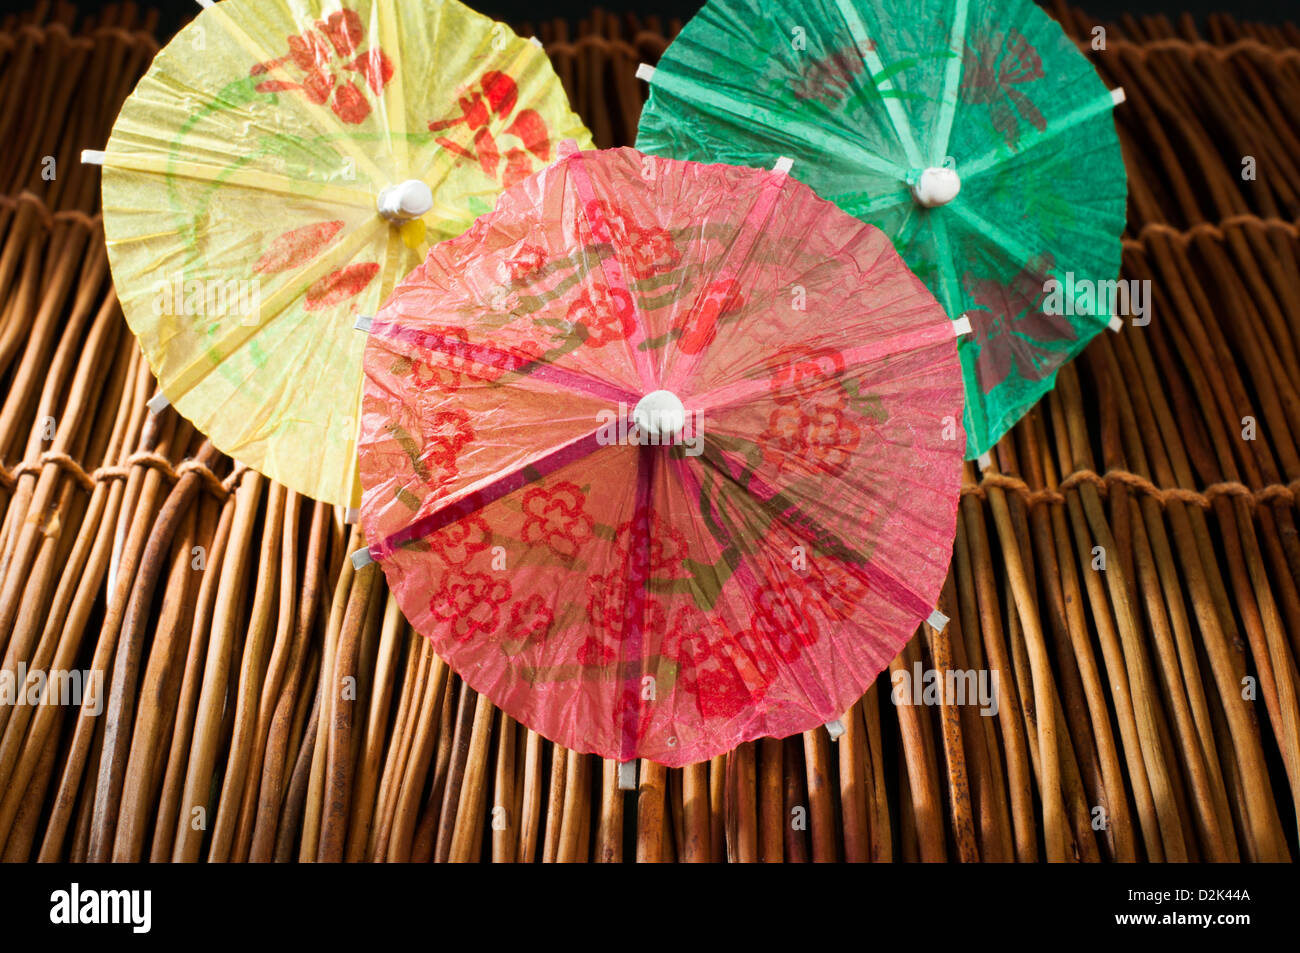 Bunten cocktail Regenschirme auf Holzsockel. Nahaufnahme Stockfoto